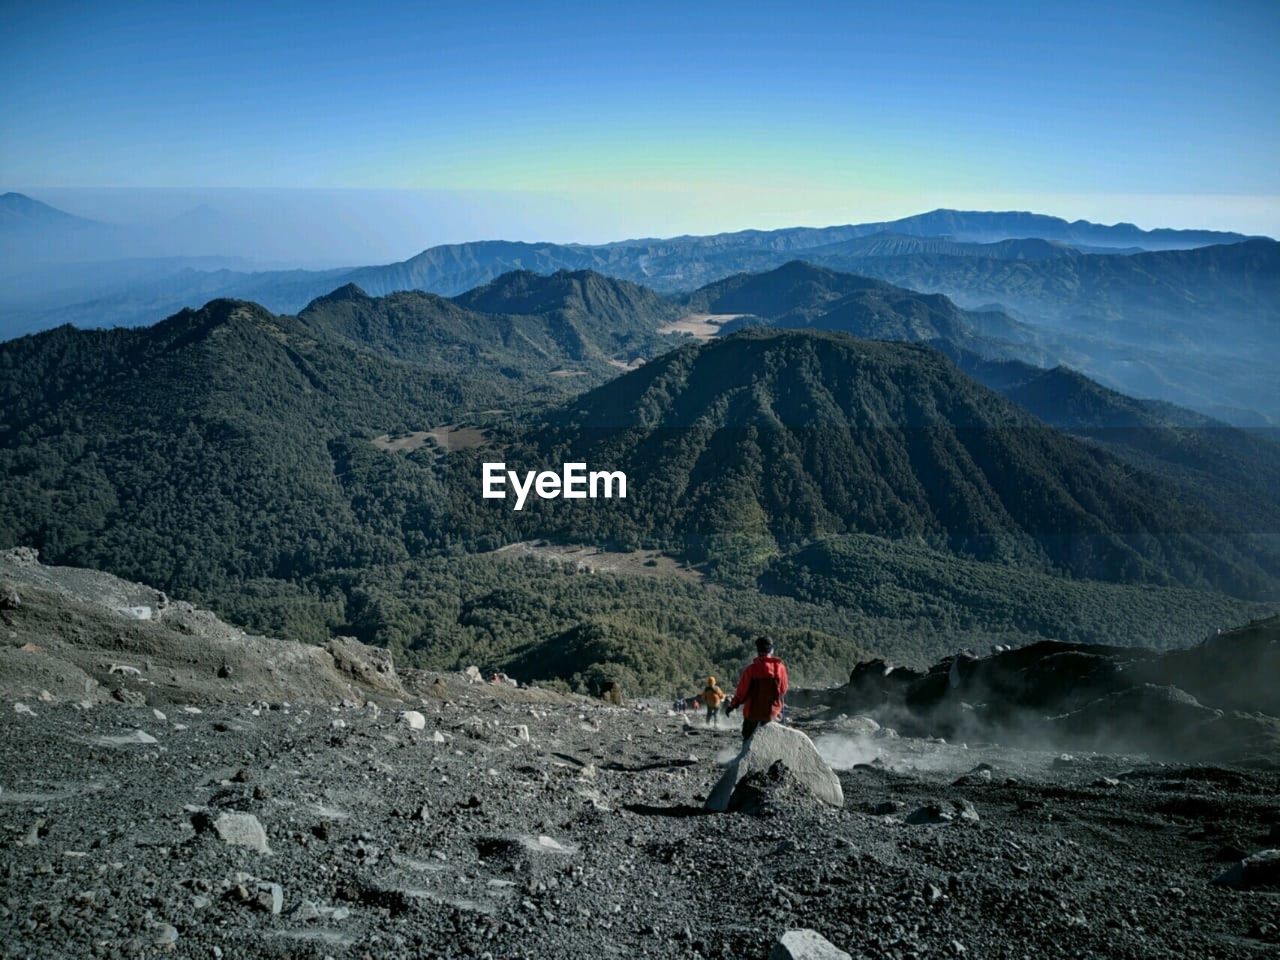 Man looking at mountains